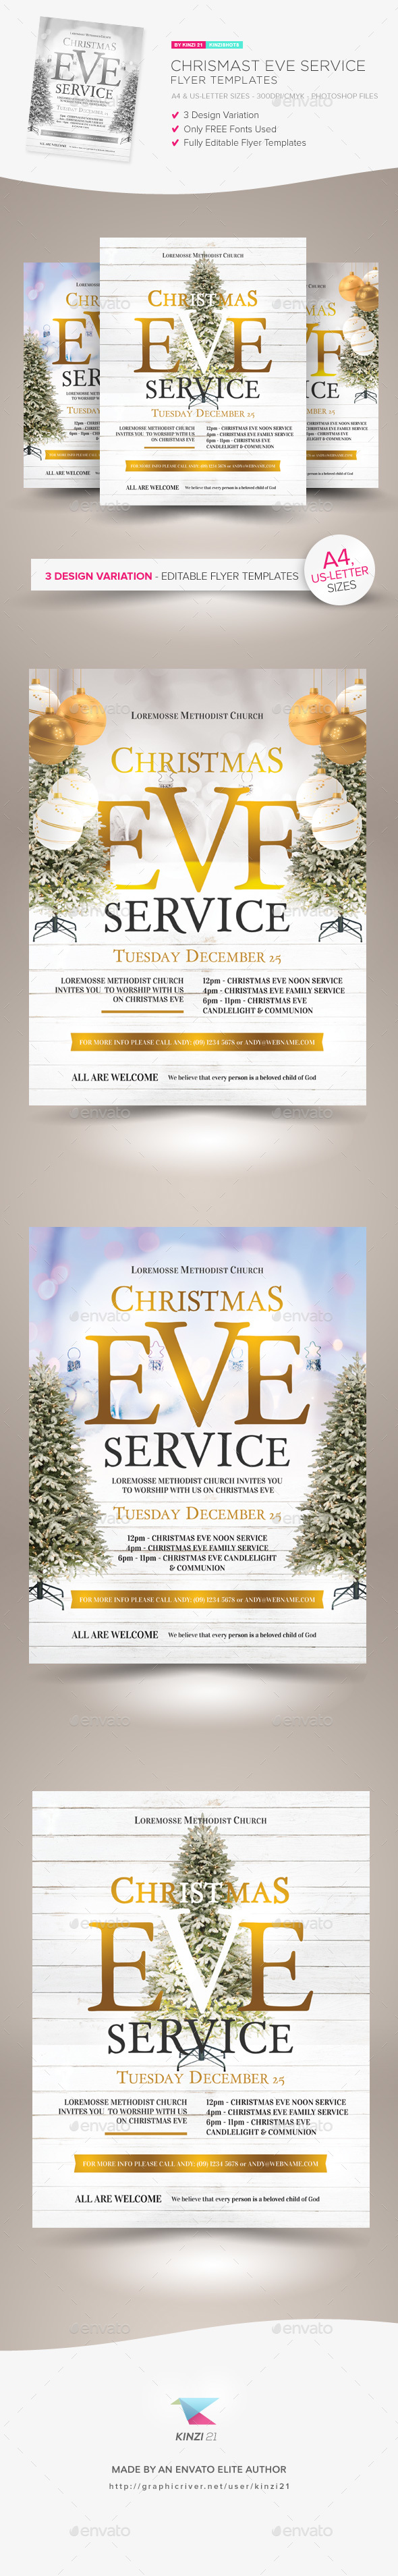 Christmas Eve Service Flyer Templates